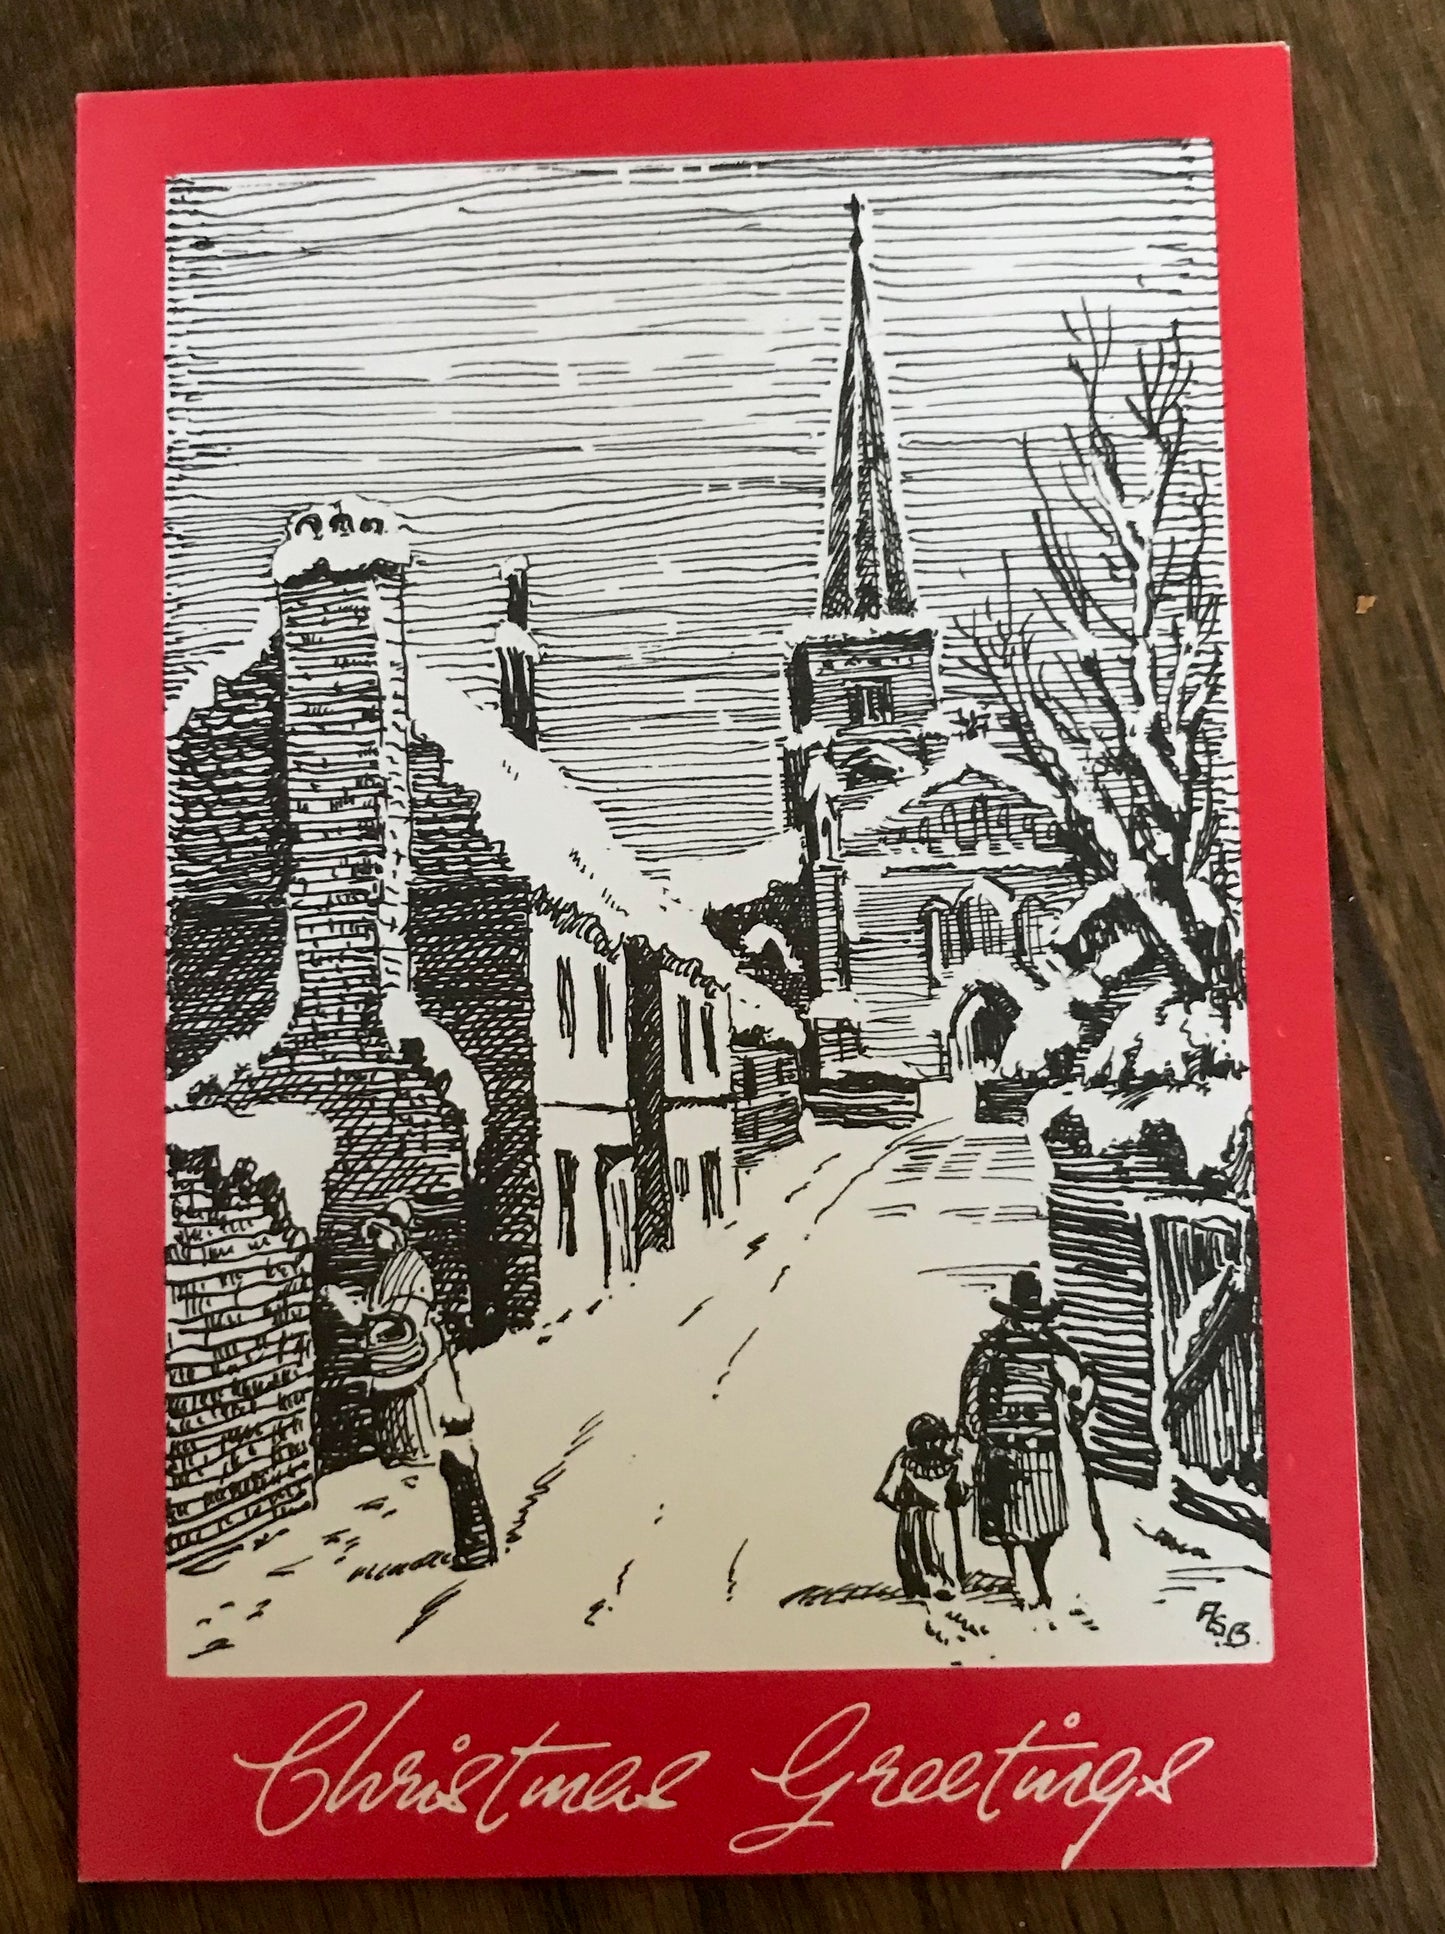 Christmas Card of St. Martin's "Intermediate" Church